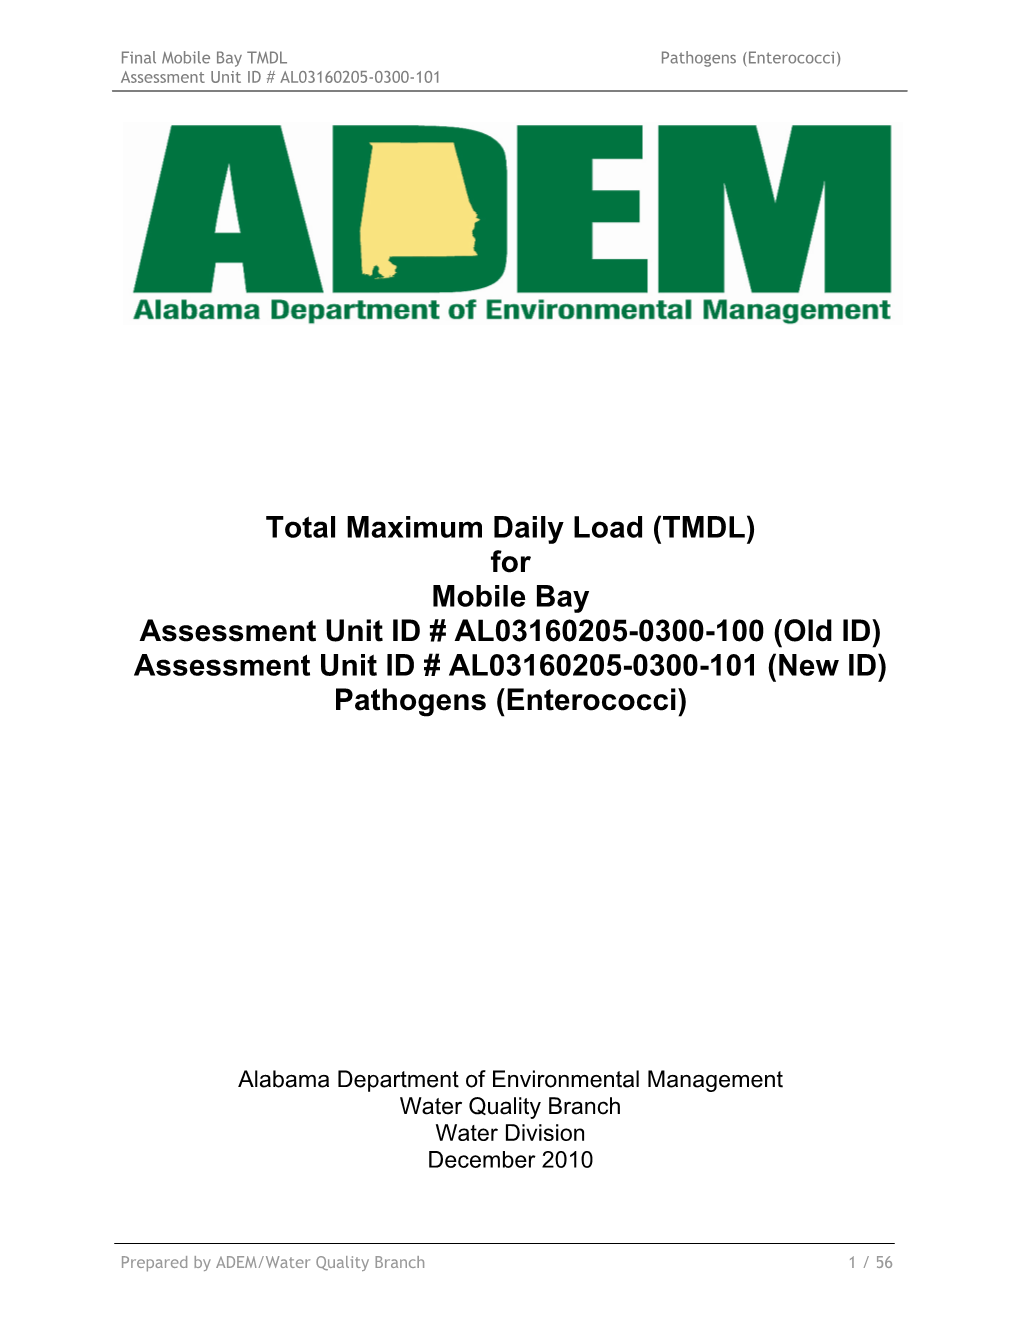 TMDL) for Mobile Bay Assessment Unit ID # AL03160205-0300-100 (Old ID) Assessment Unit ID # AL03160205-0300-101 (New ID) Pathogens (Enterococci